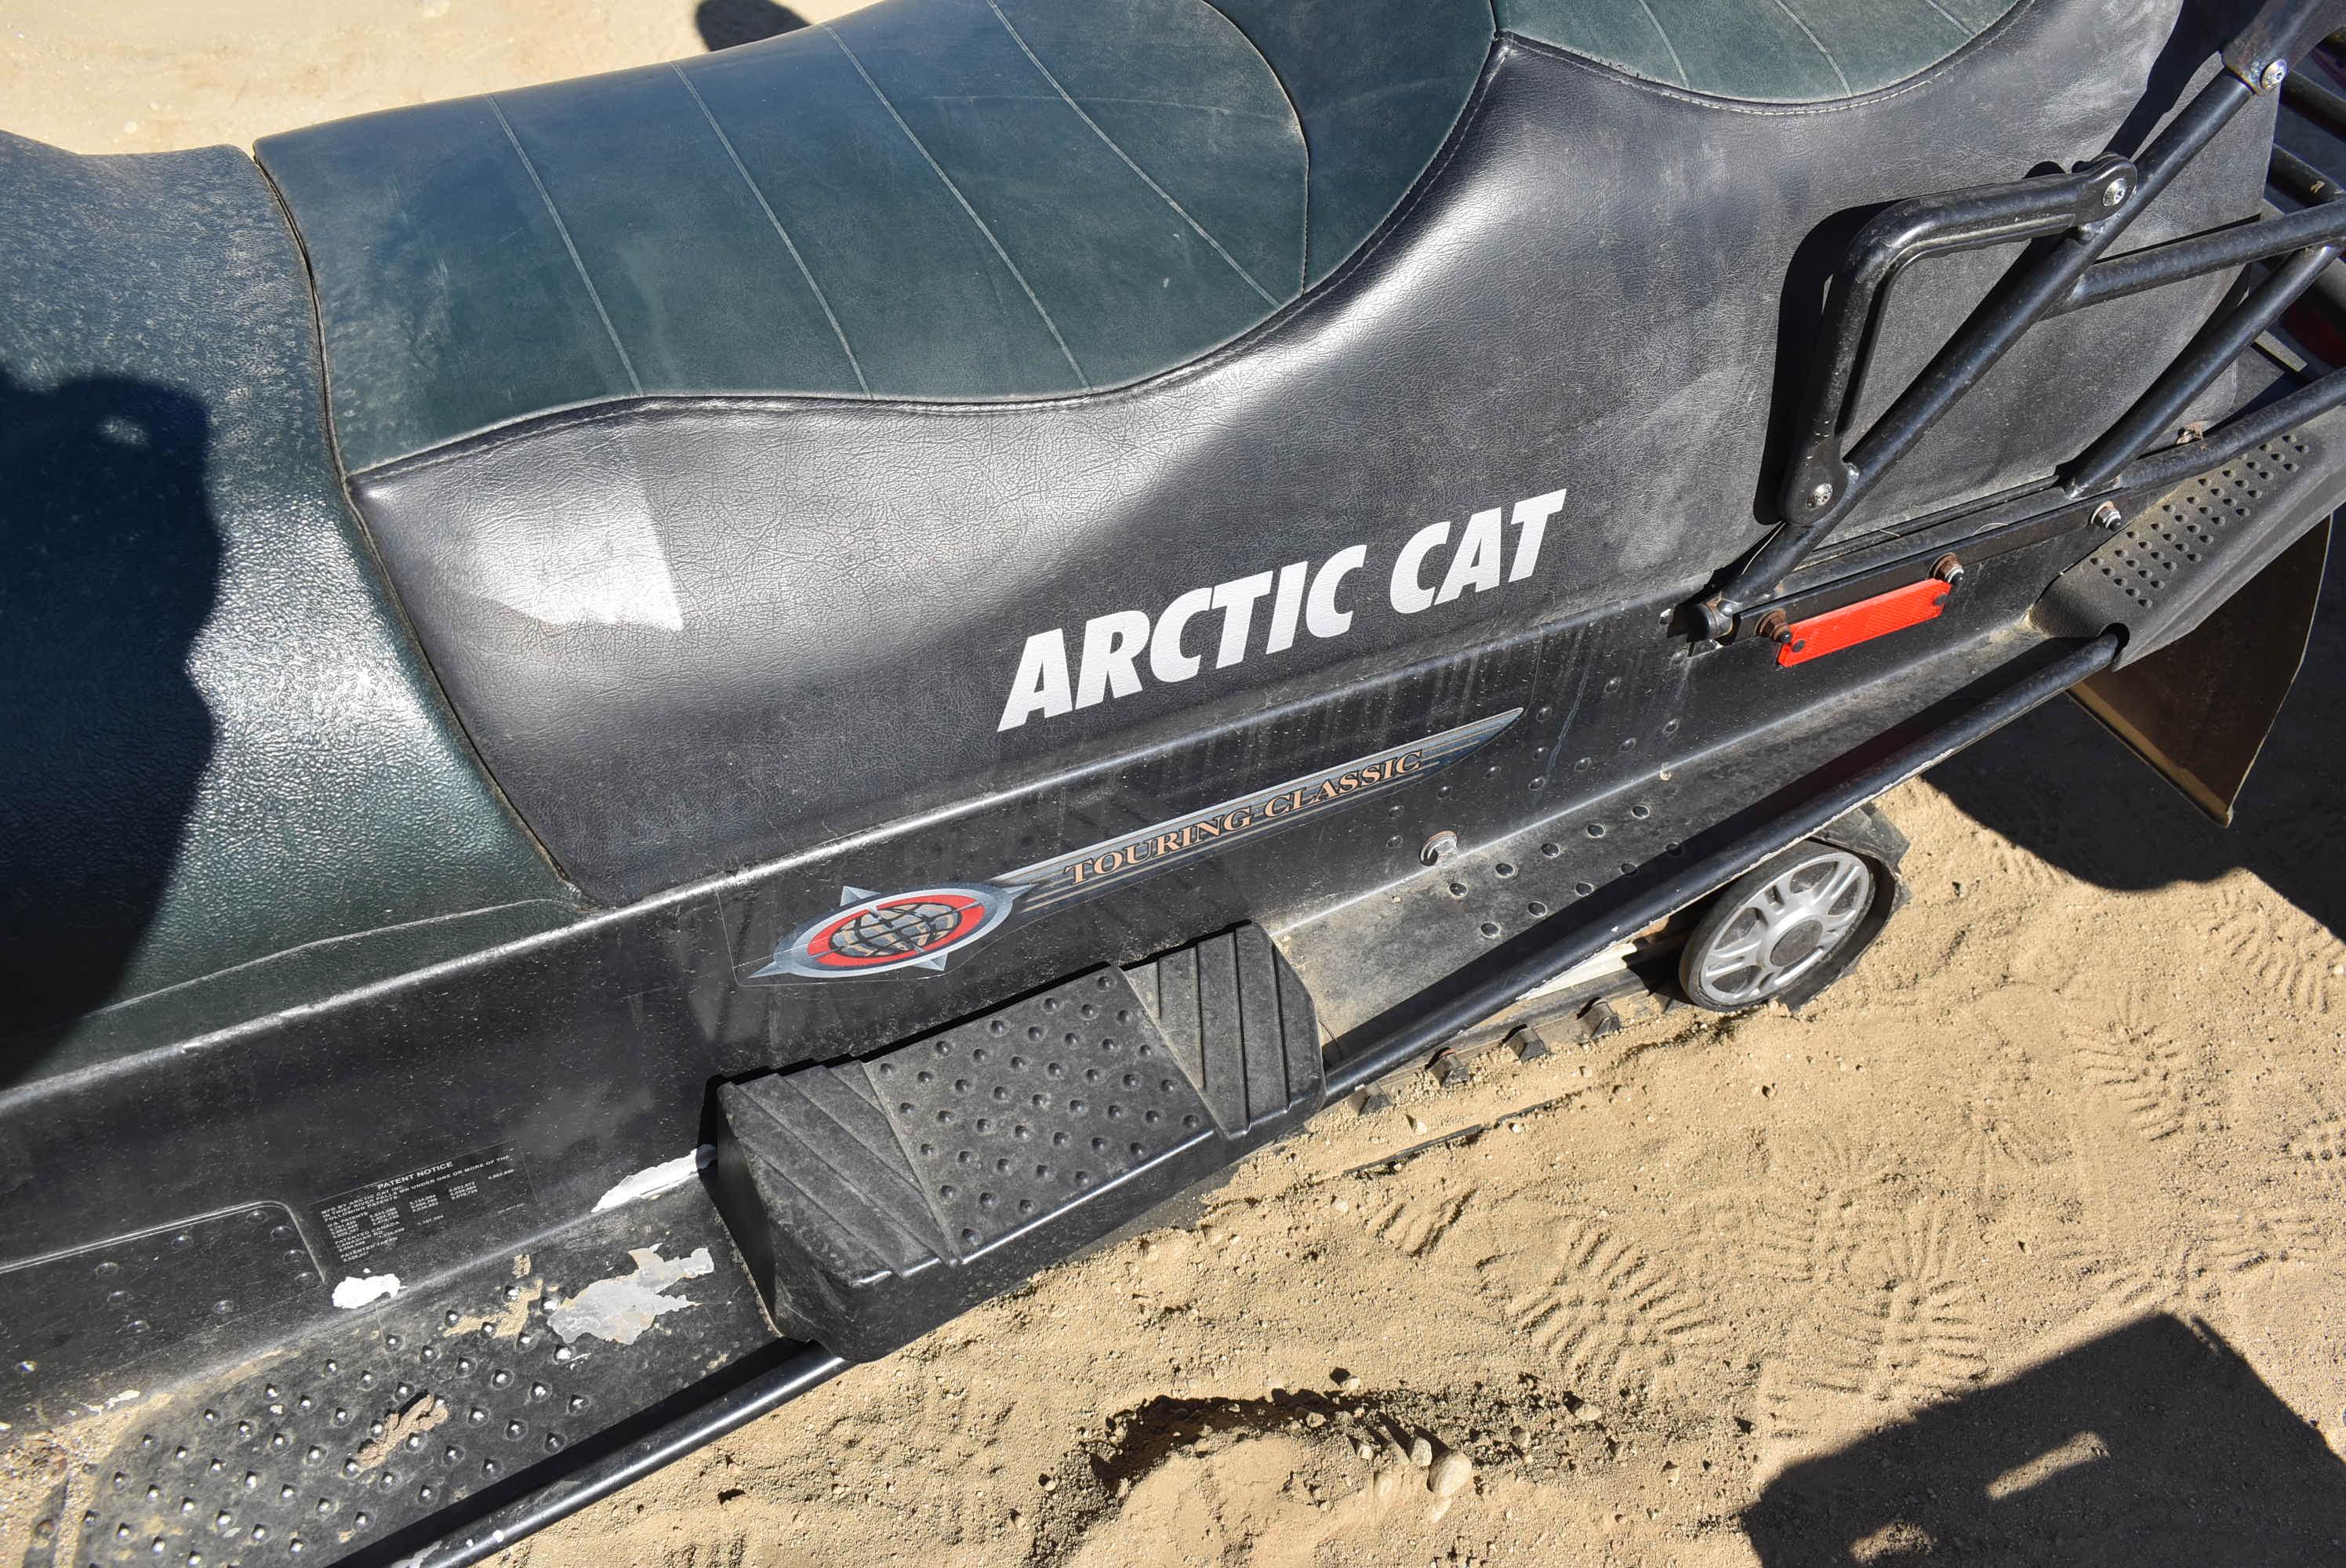 2001 Arctic Cat Panther 570 touring snowmobile